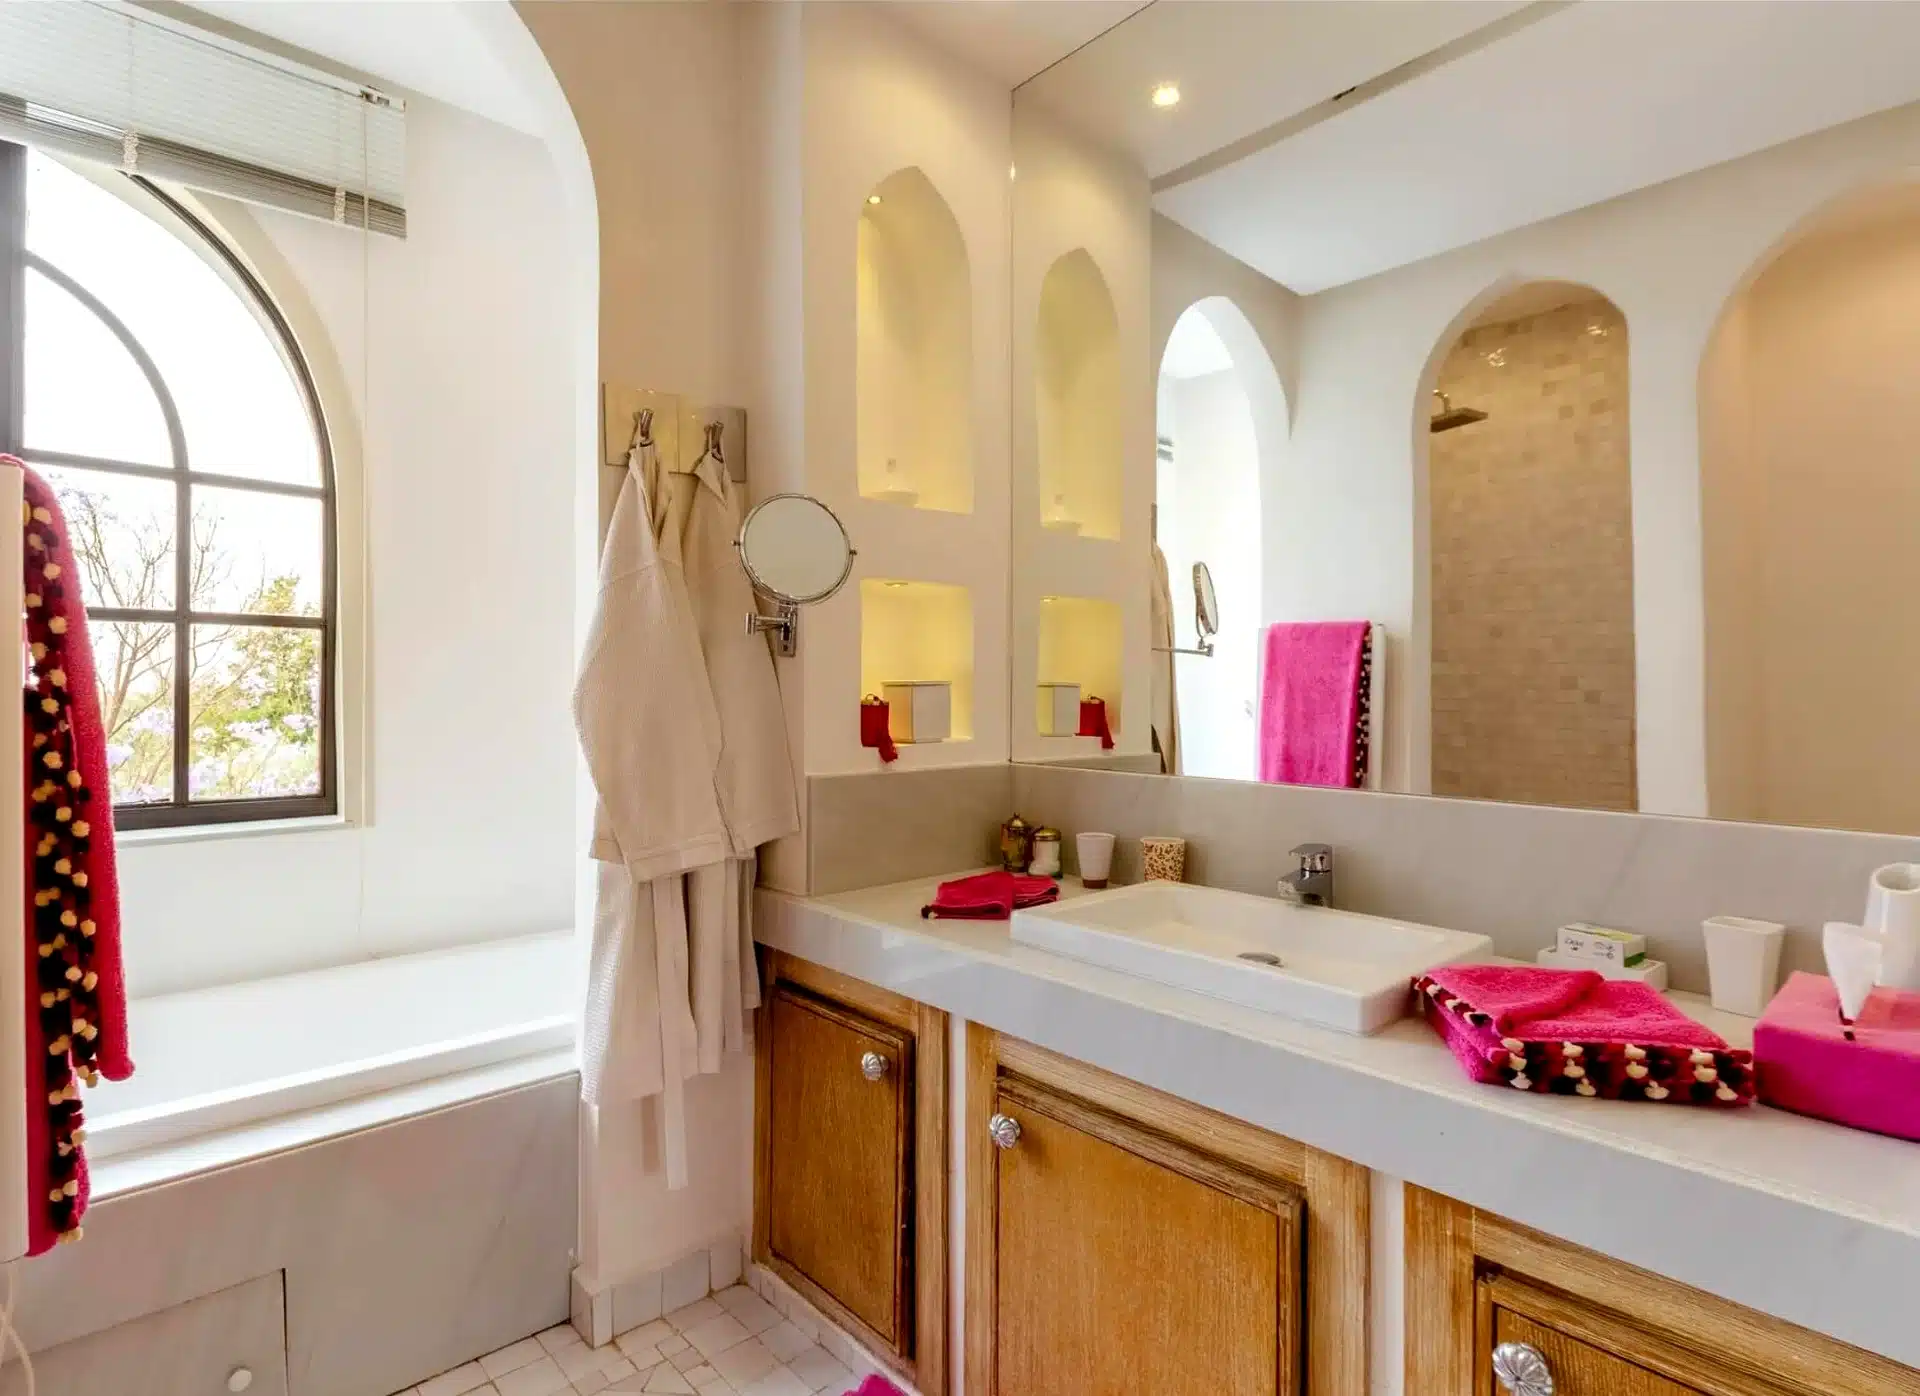 Luxury bathroom in Marrakesh Villa, fundraiser auction items, live auction items